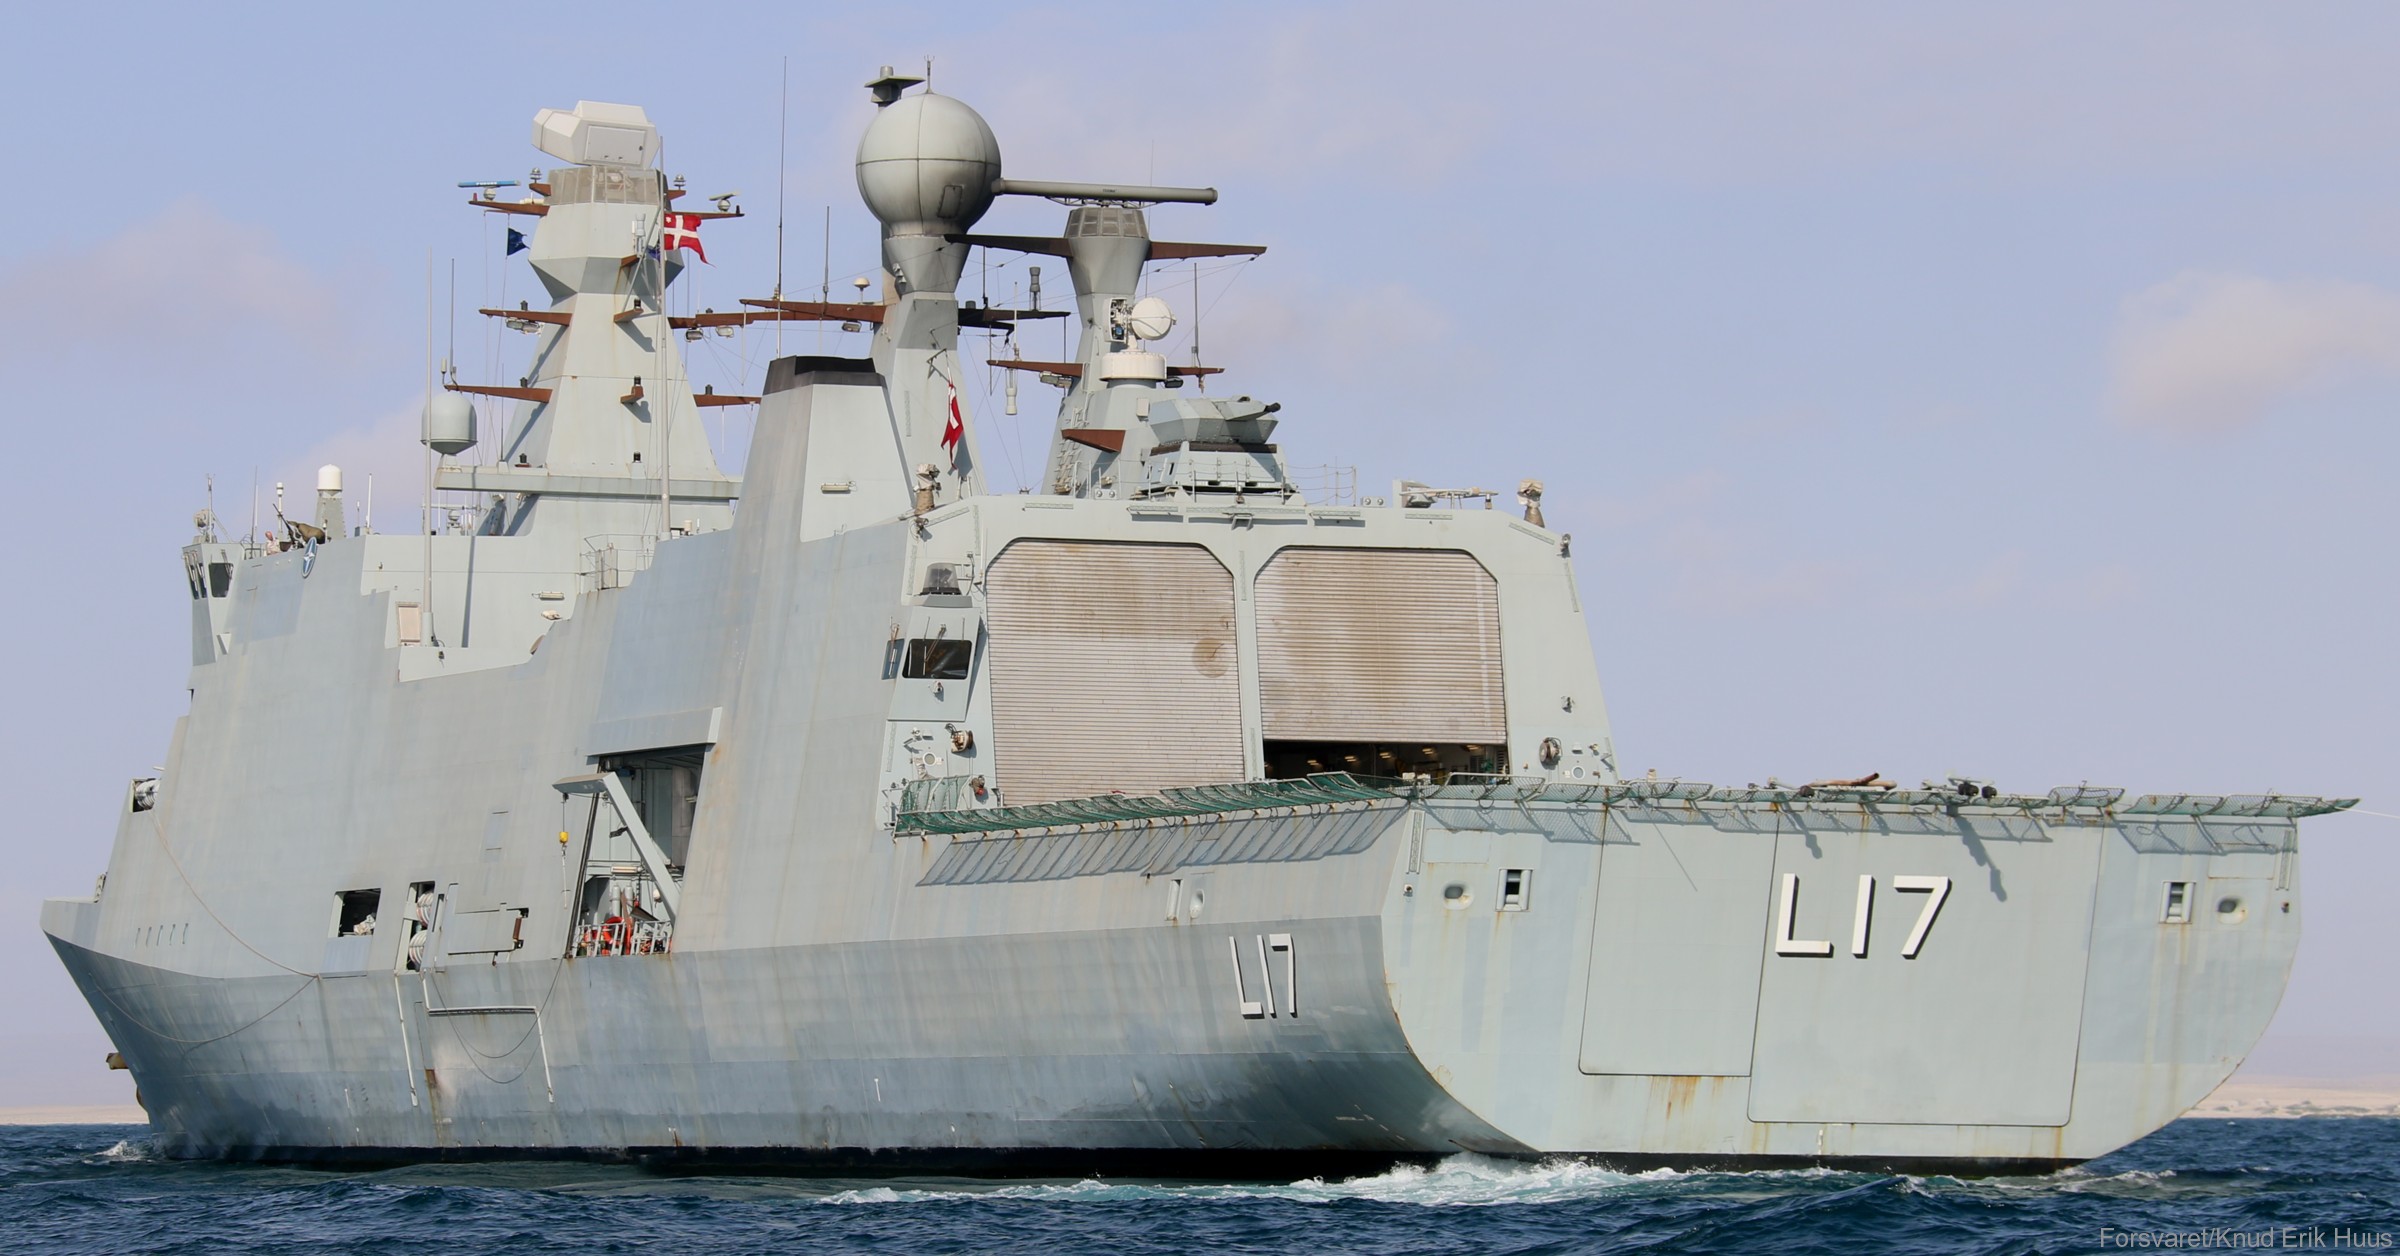 f-342 hdms esbern snare l-17 frigate command support ship royal danish navy 08